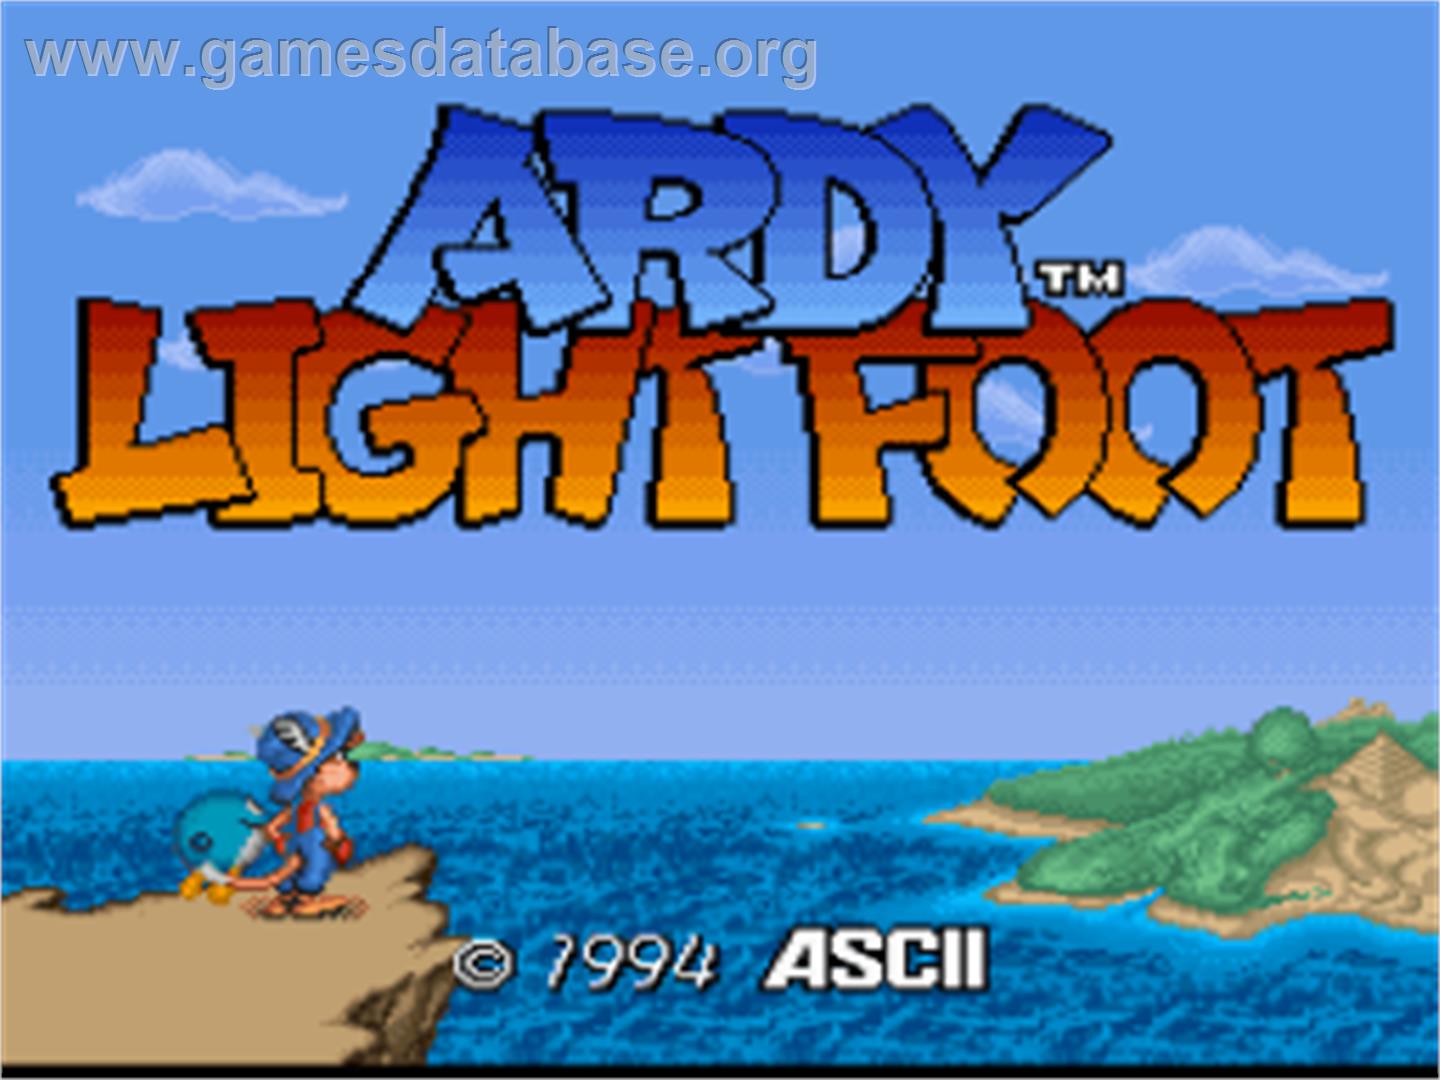 Ardy Lightfoot - Nintendo SNES - Artwork - Title Screen